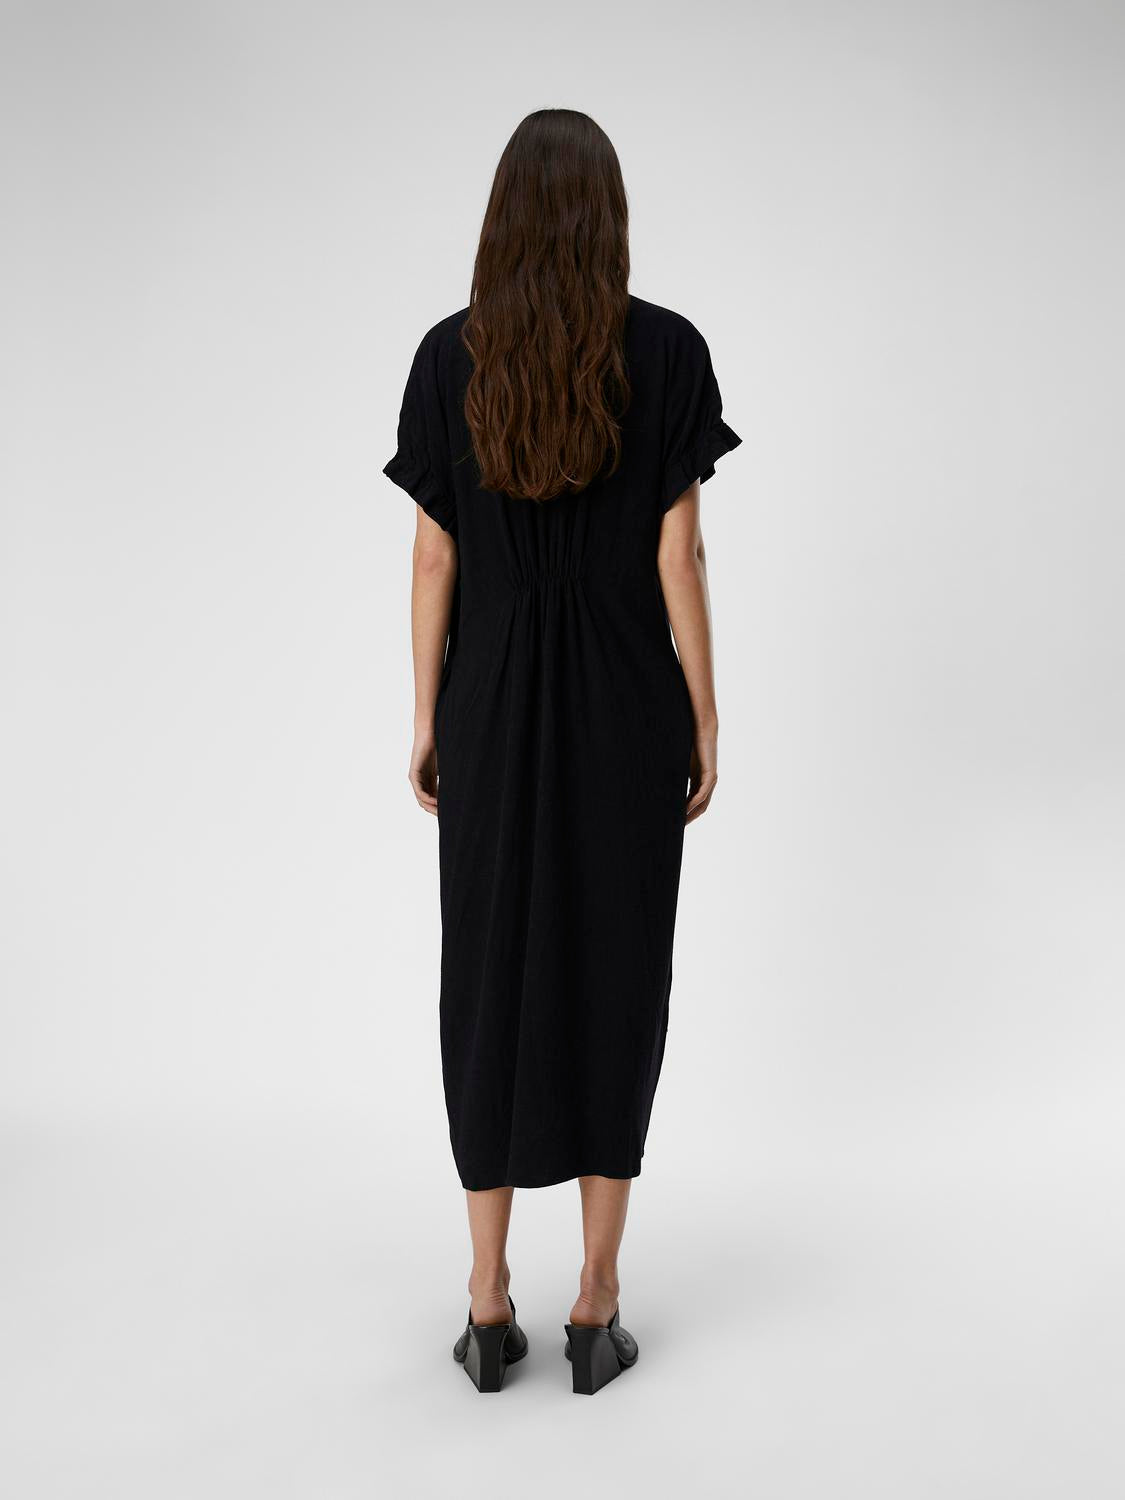 Object Sanne Tiana Dress, Black